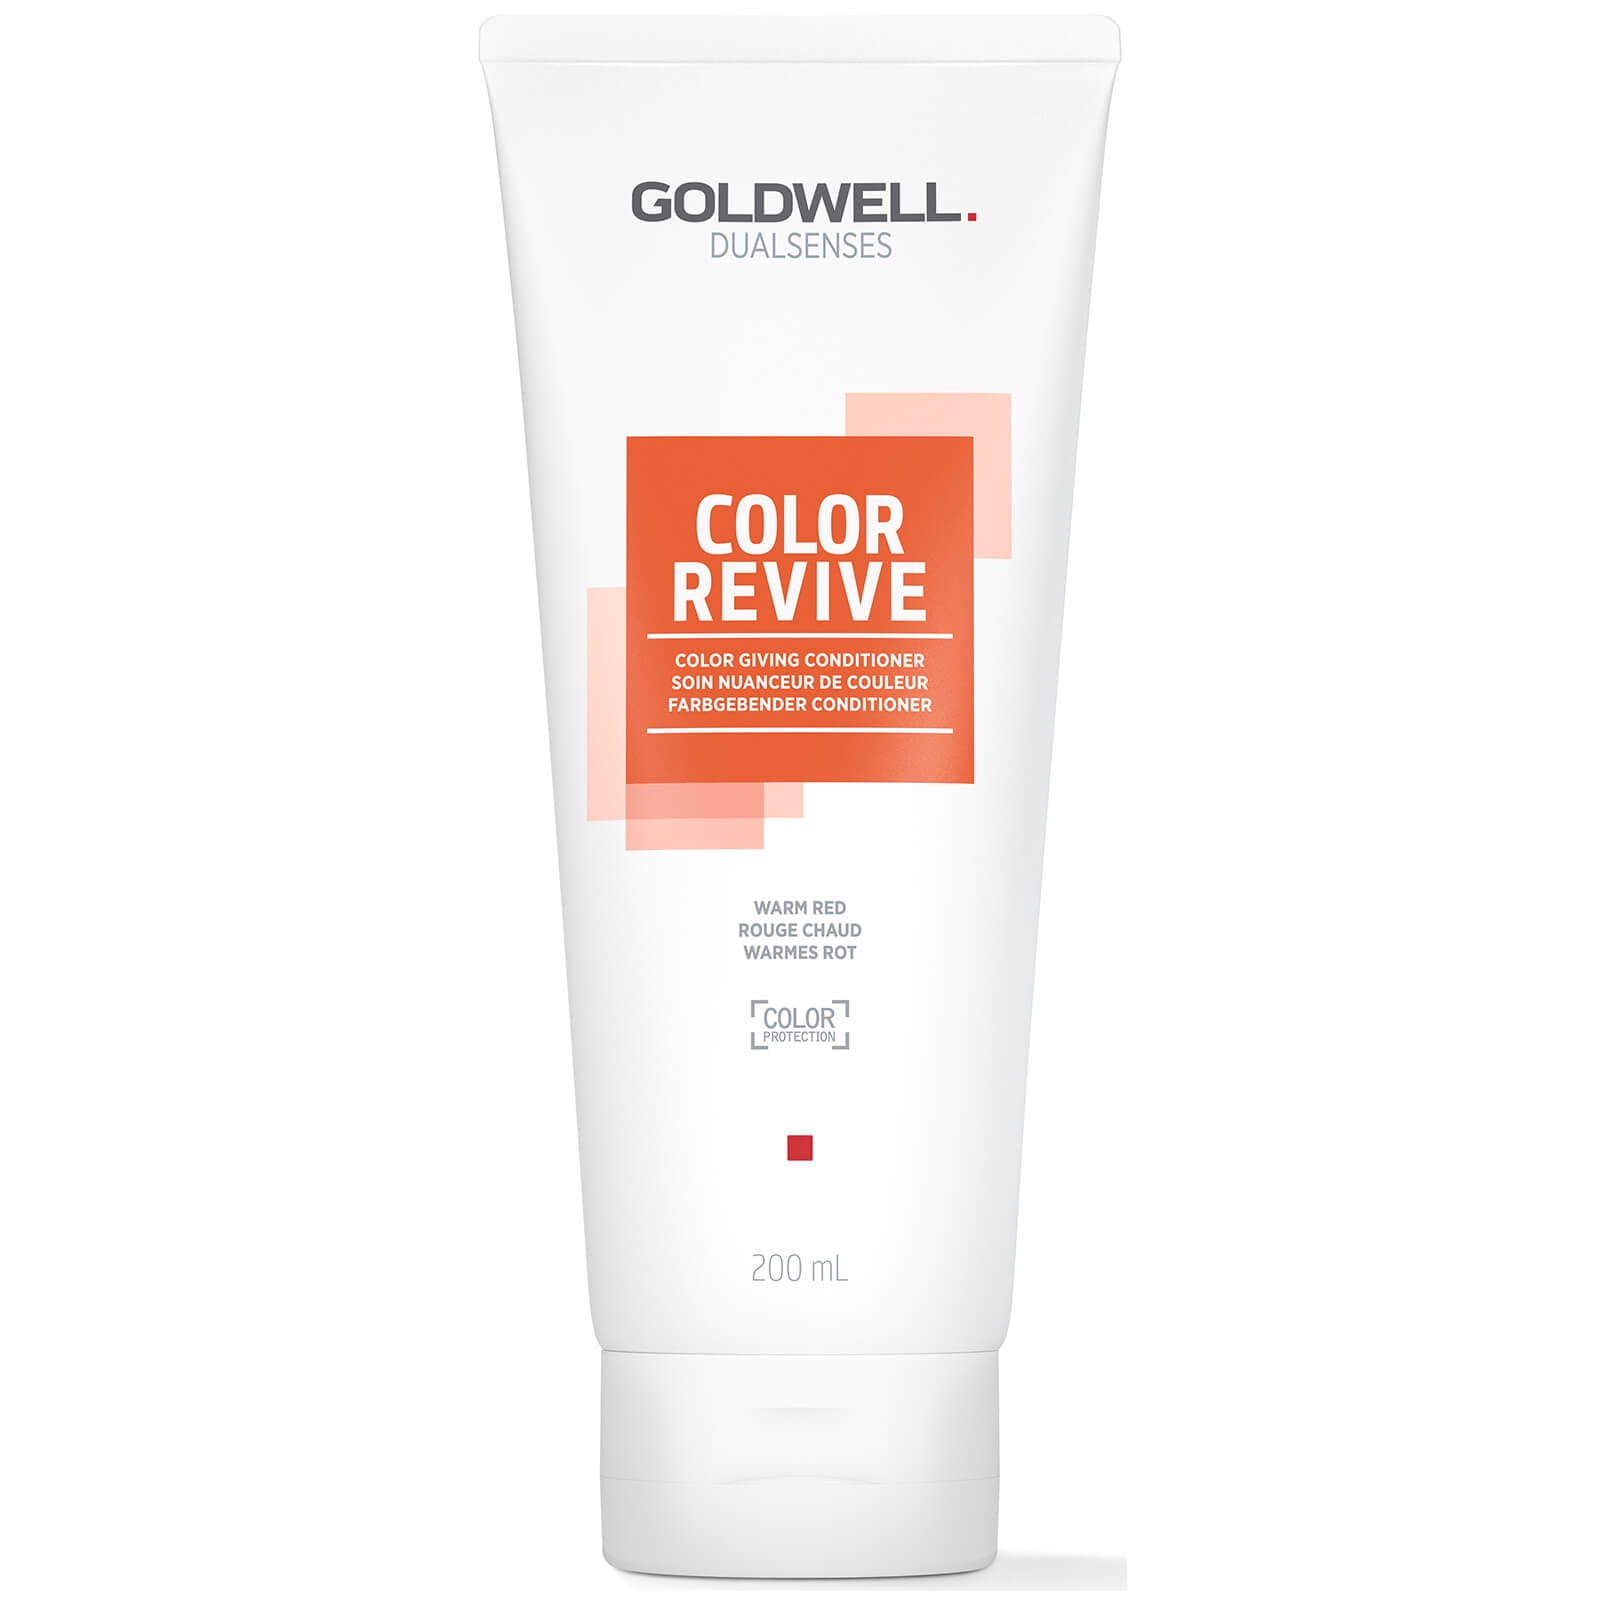 Goldwell Dualsenses Color Revive Color Conditioner (6.7 oz) - Warm Red -  Walmart.com